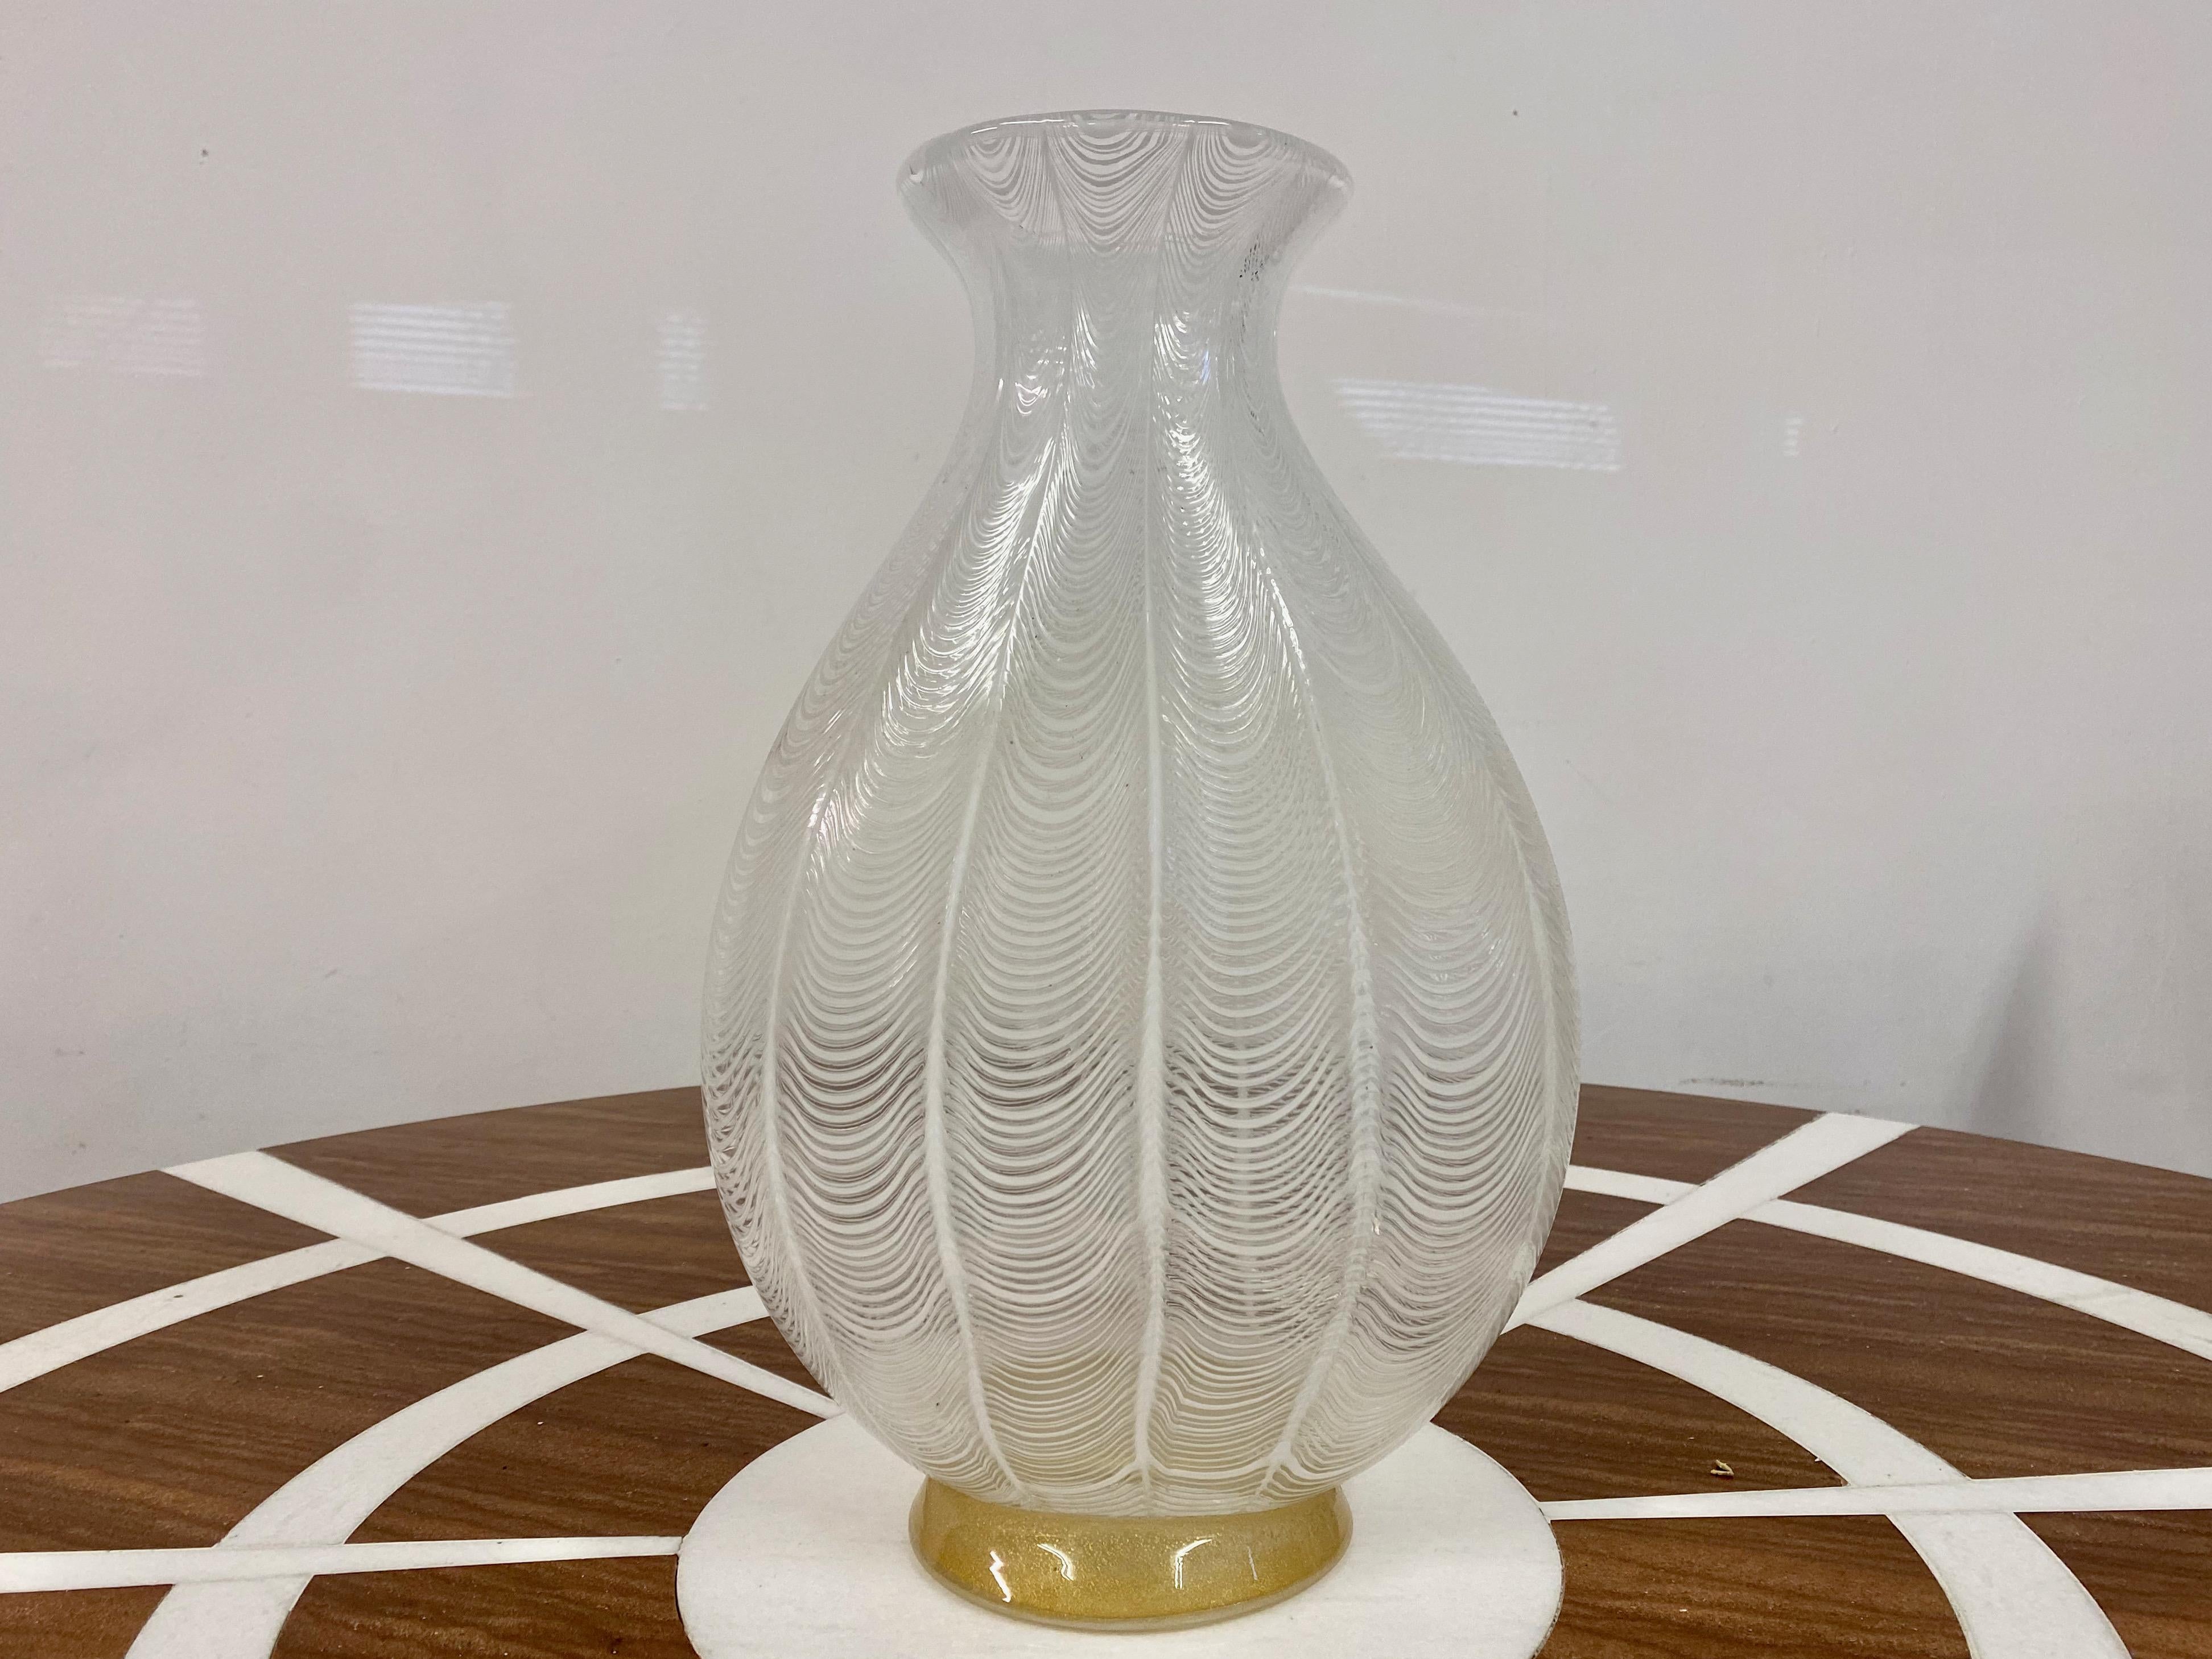 Vase

Murano glass

By Licio Zanetti

Signed

Italy mid to late 20th Century